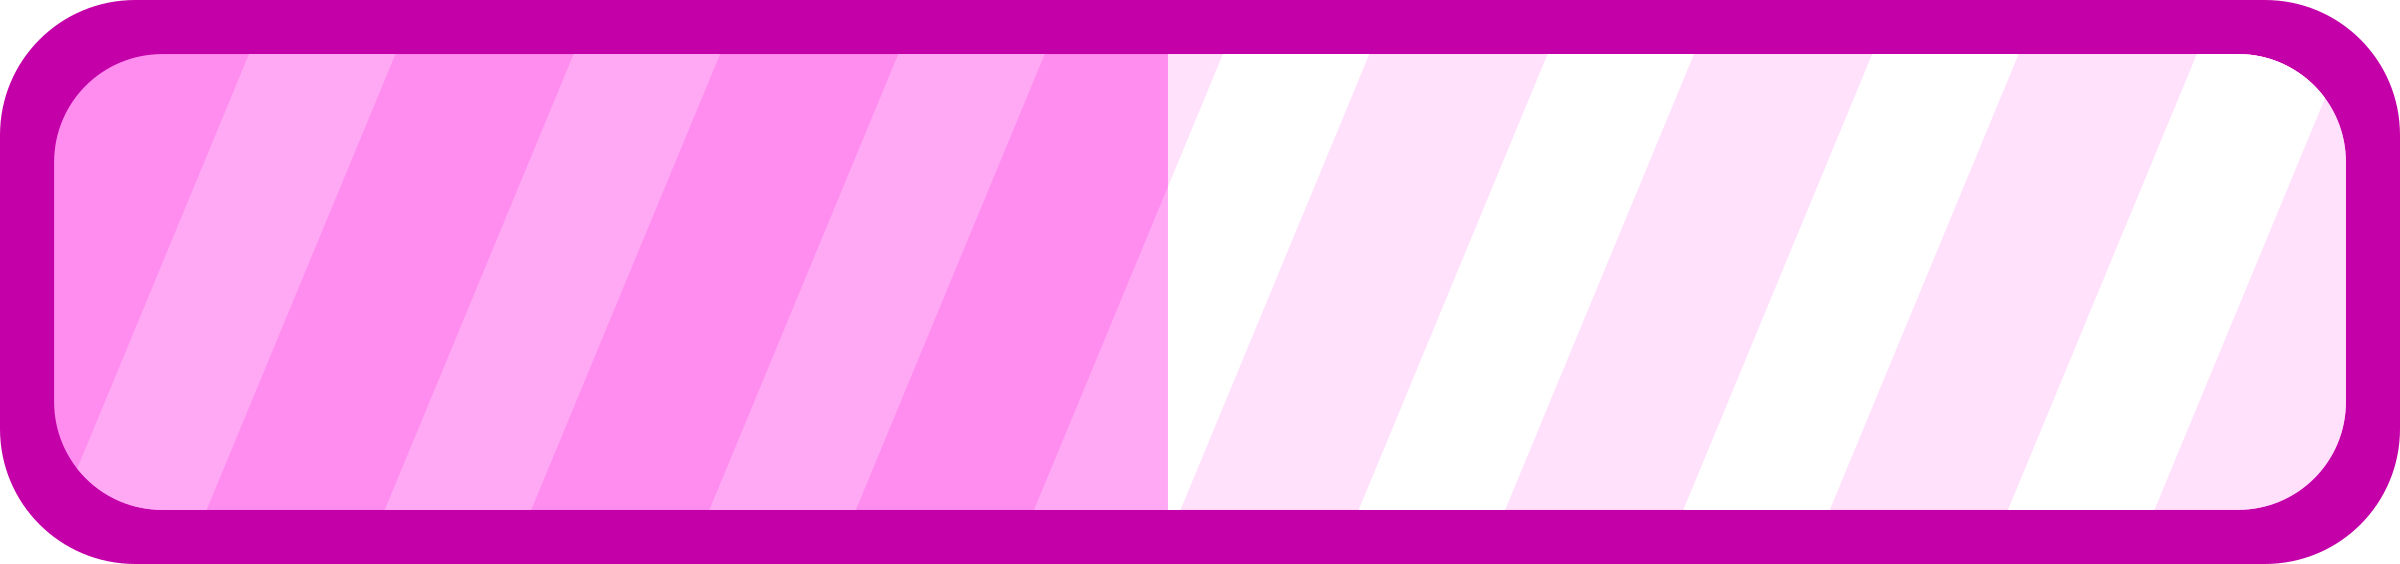 Clipart - Pink Progress Bar